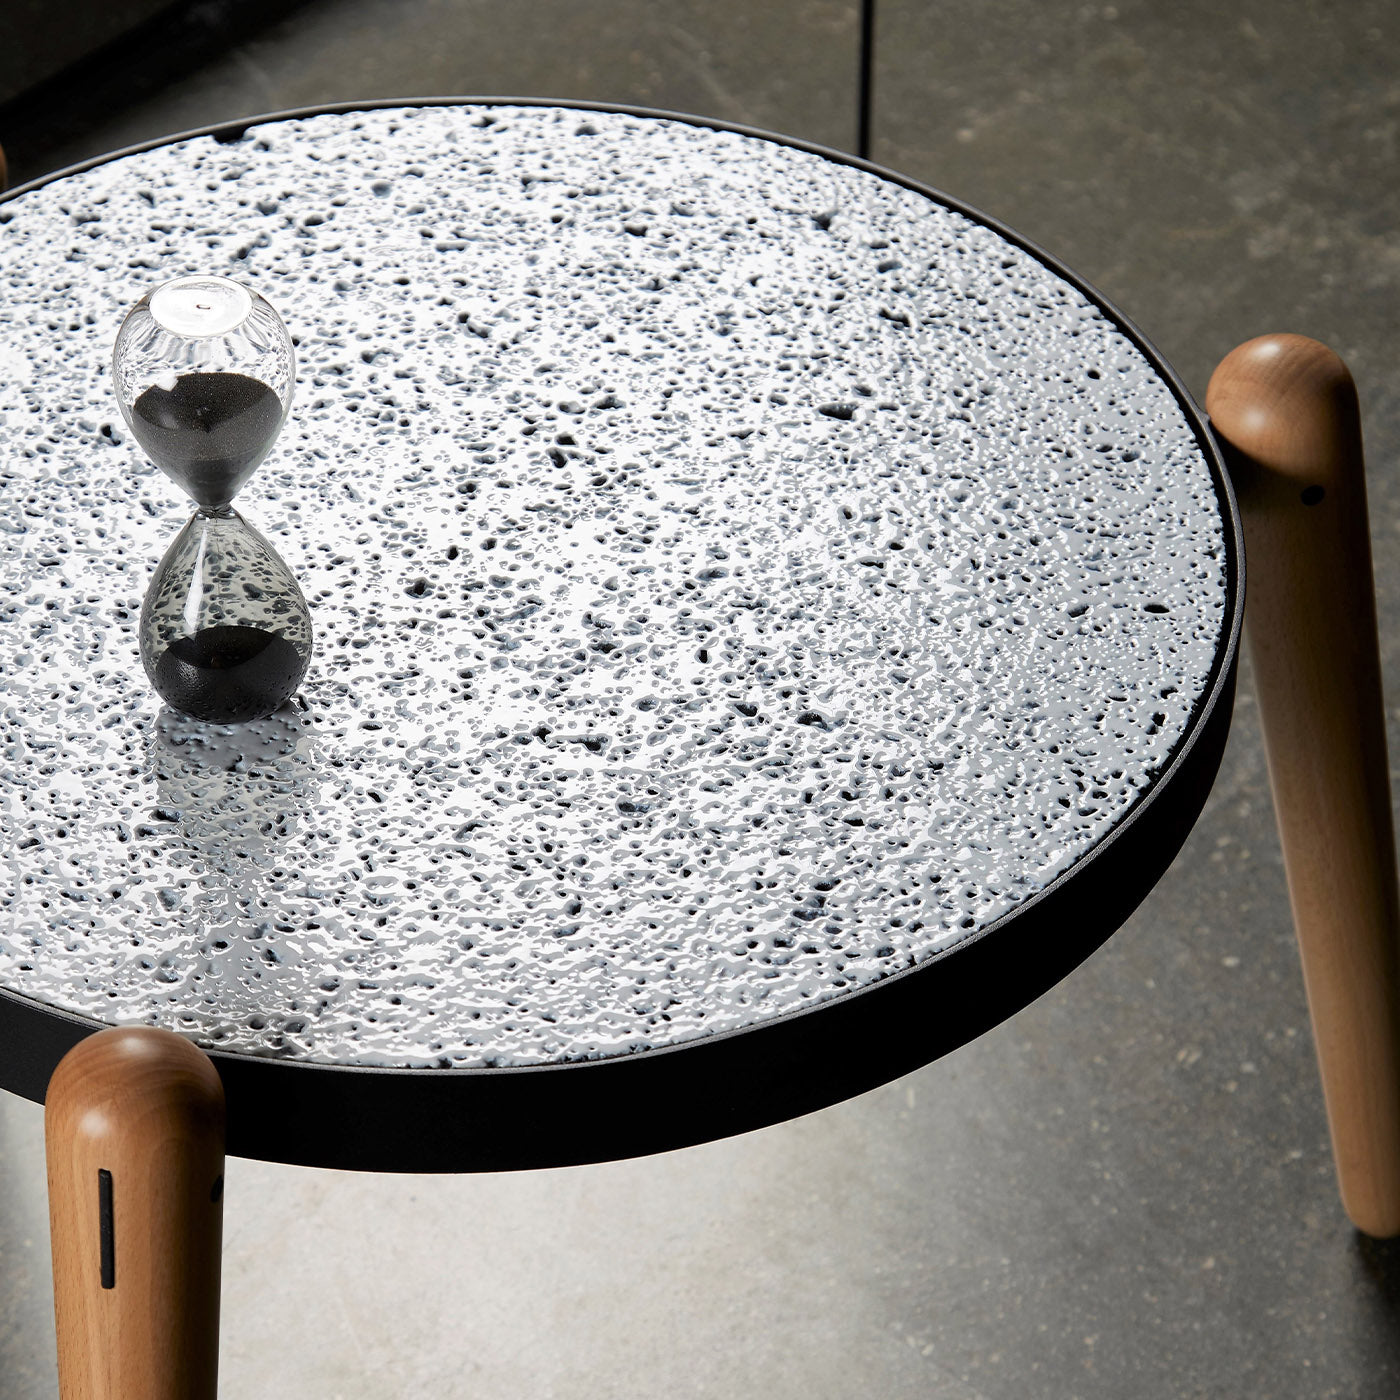 Tris Perciata Stone Round Coffee Table #1 by Luca Maci - Alternative view 1